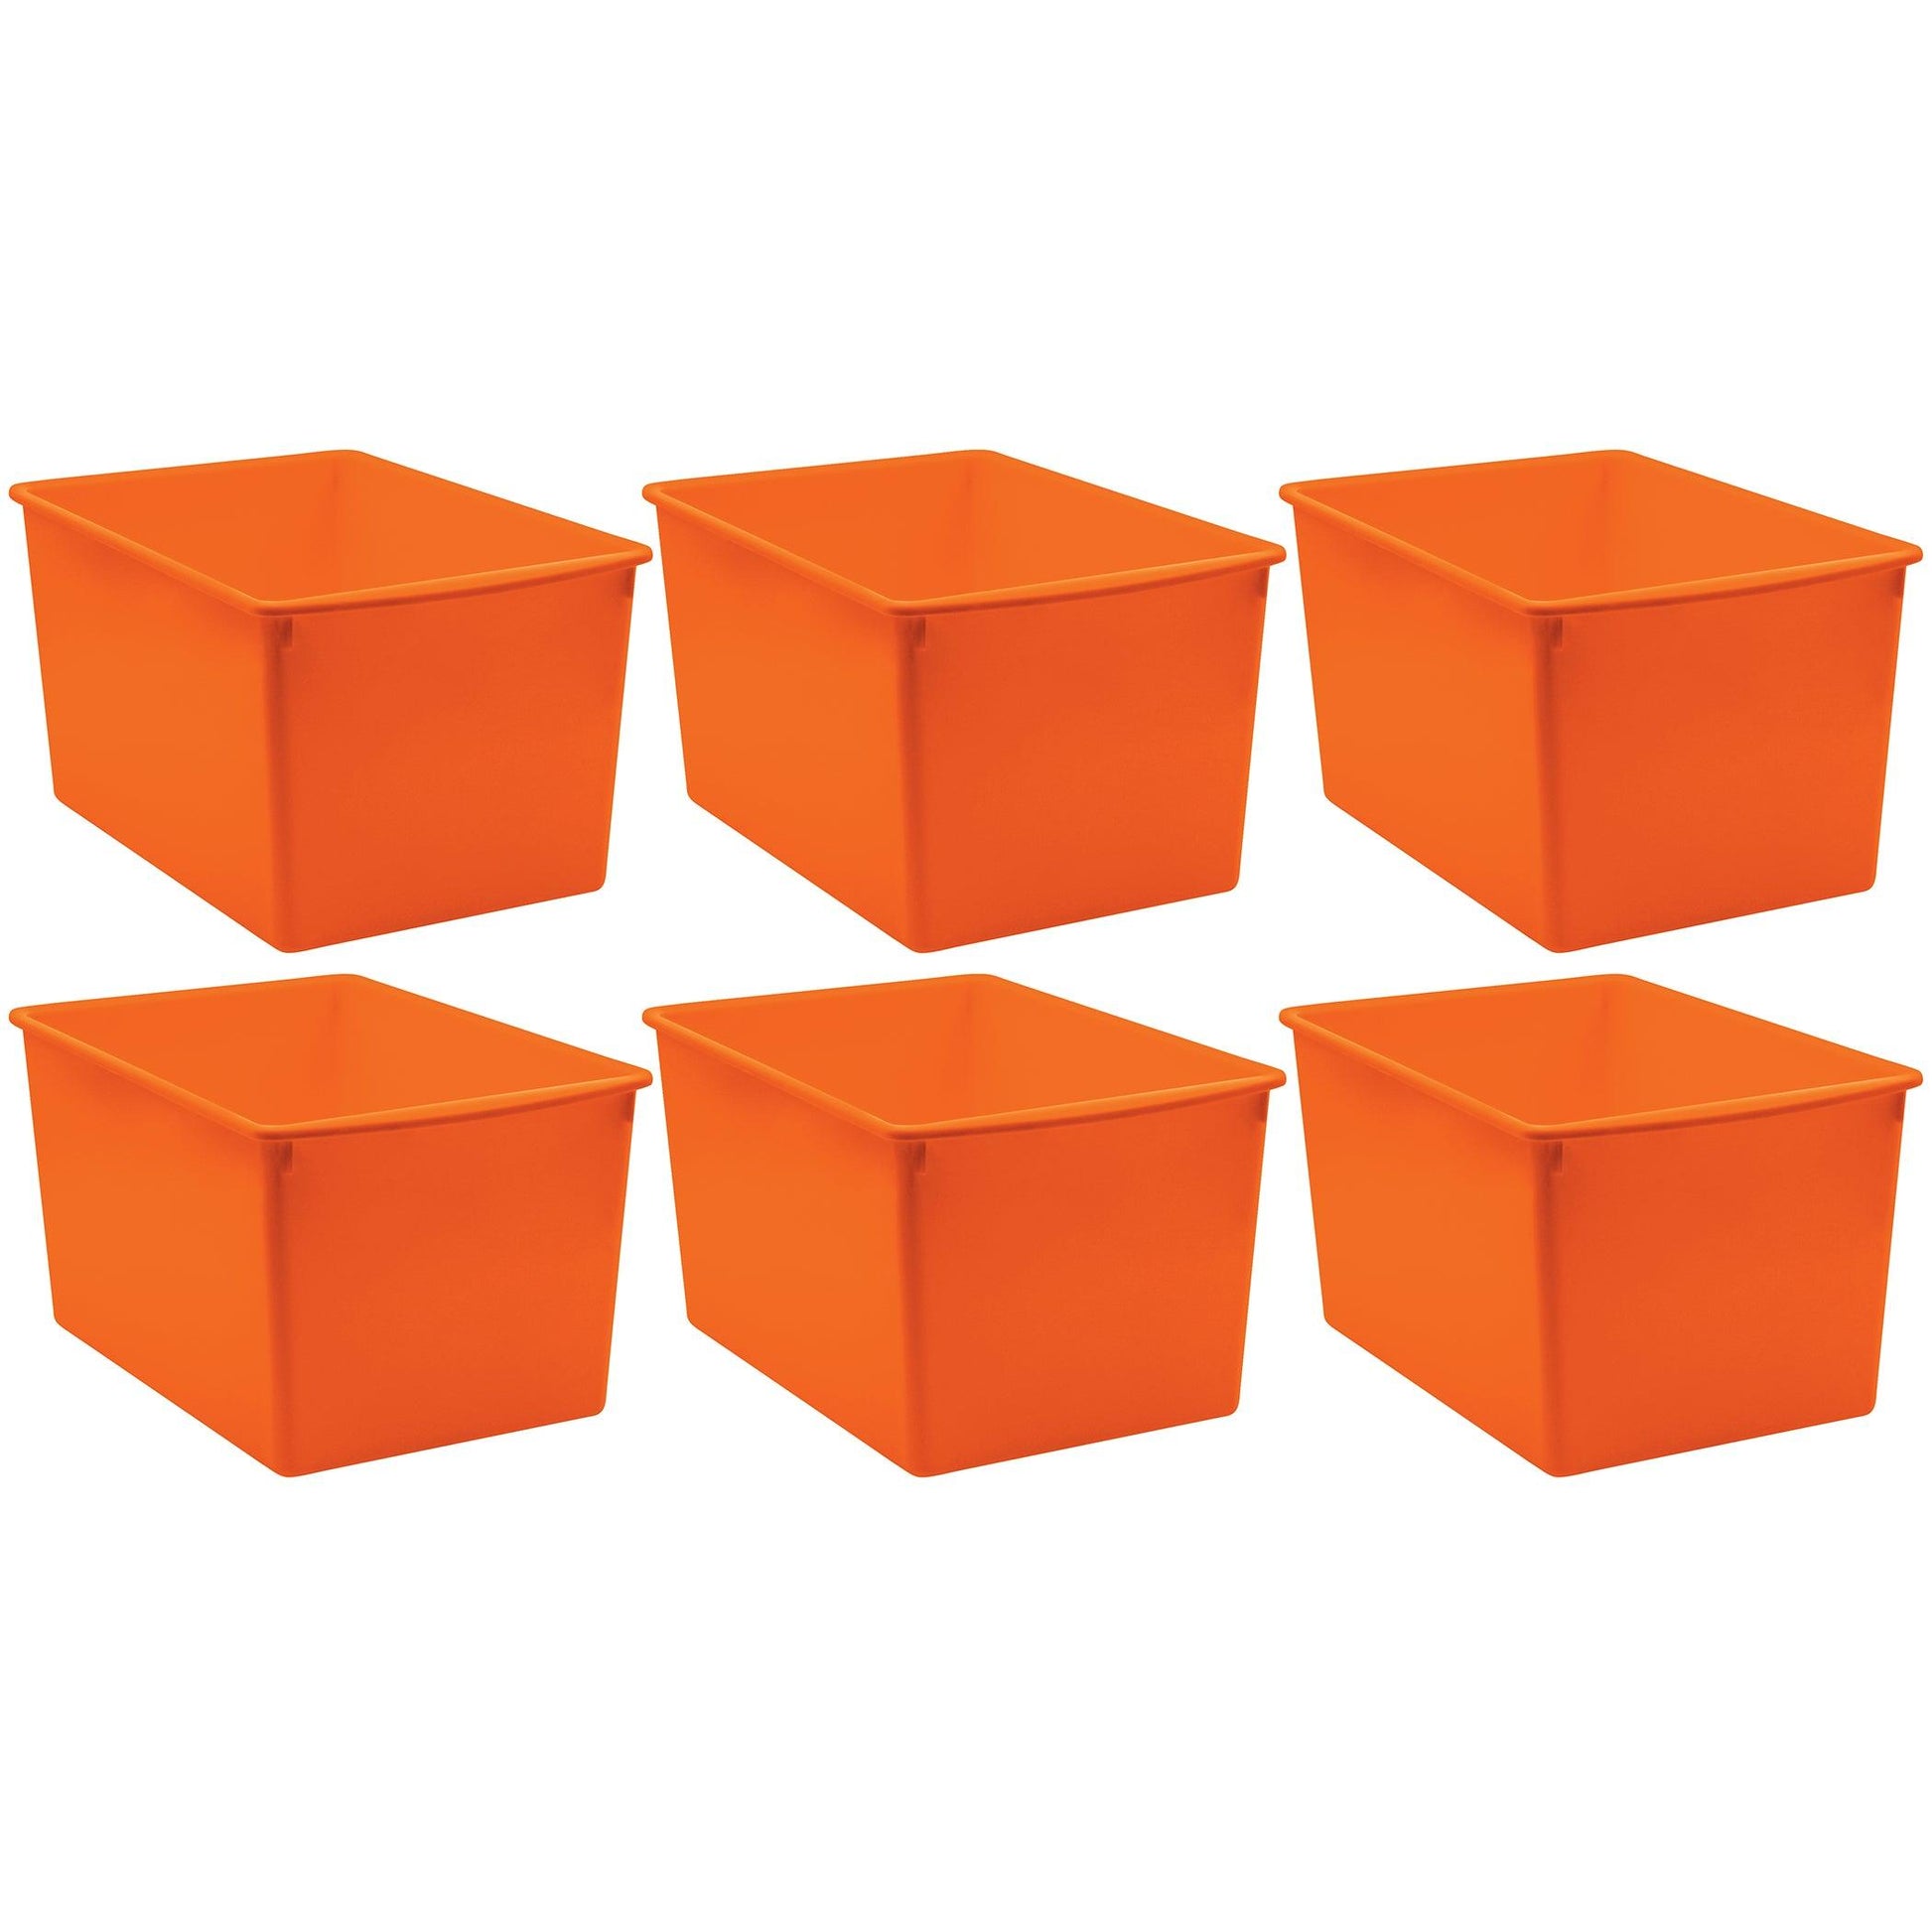 Plastic Multi-Purpose Bin, Orange, Pack of 6 - Loomini